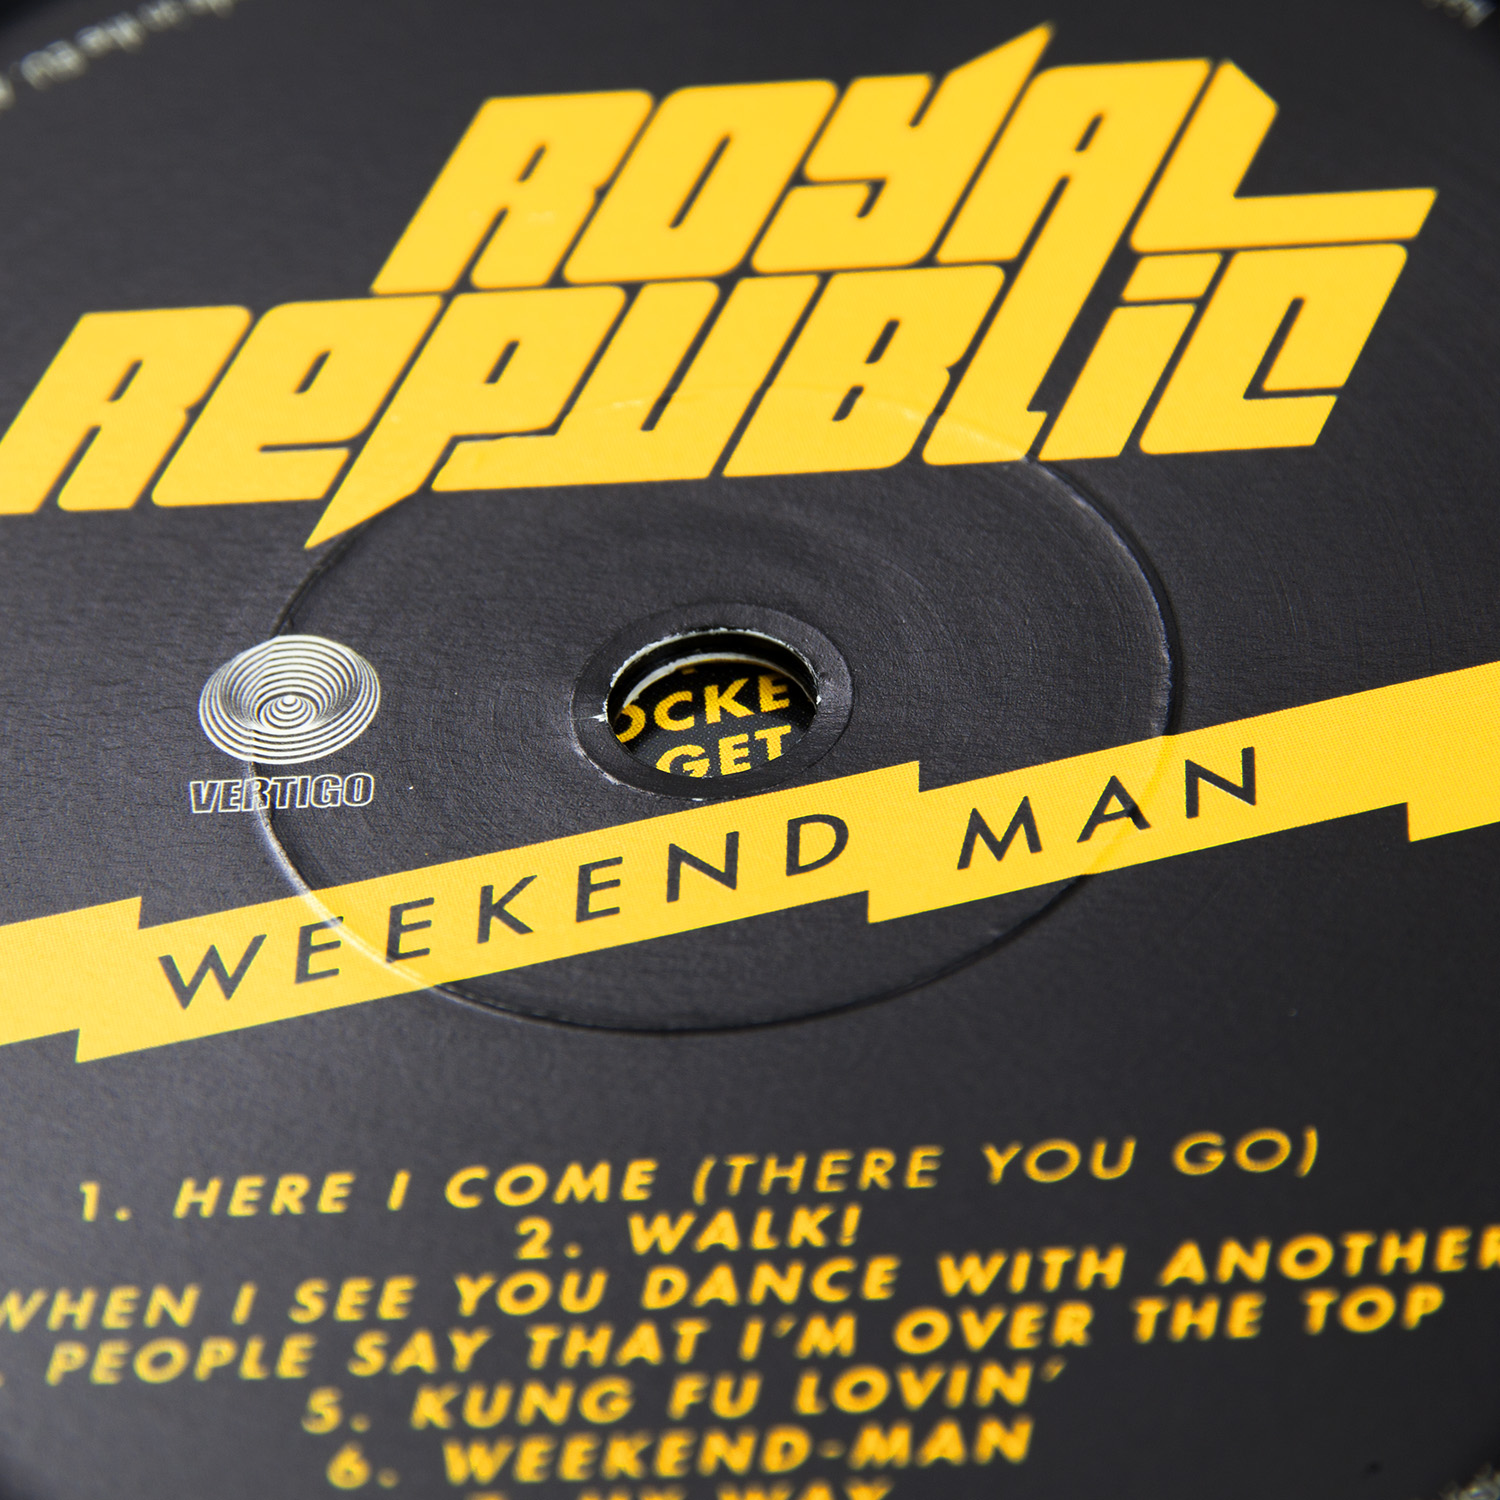 Royal Republic. Weekend Man. 7